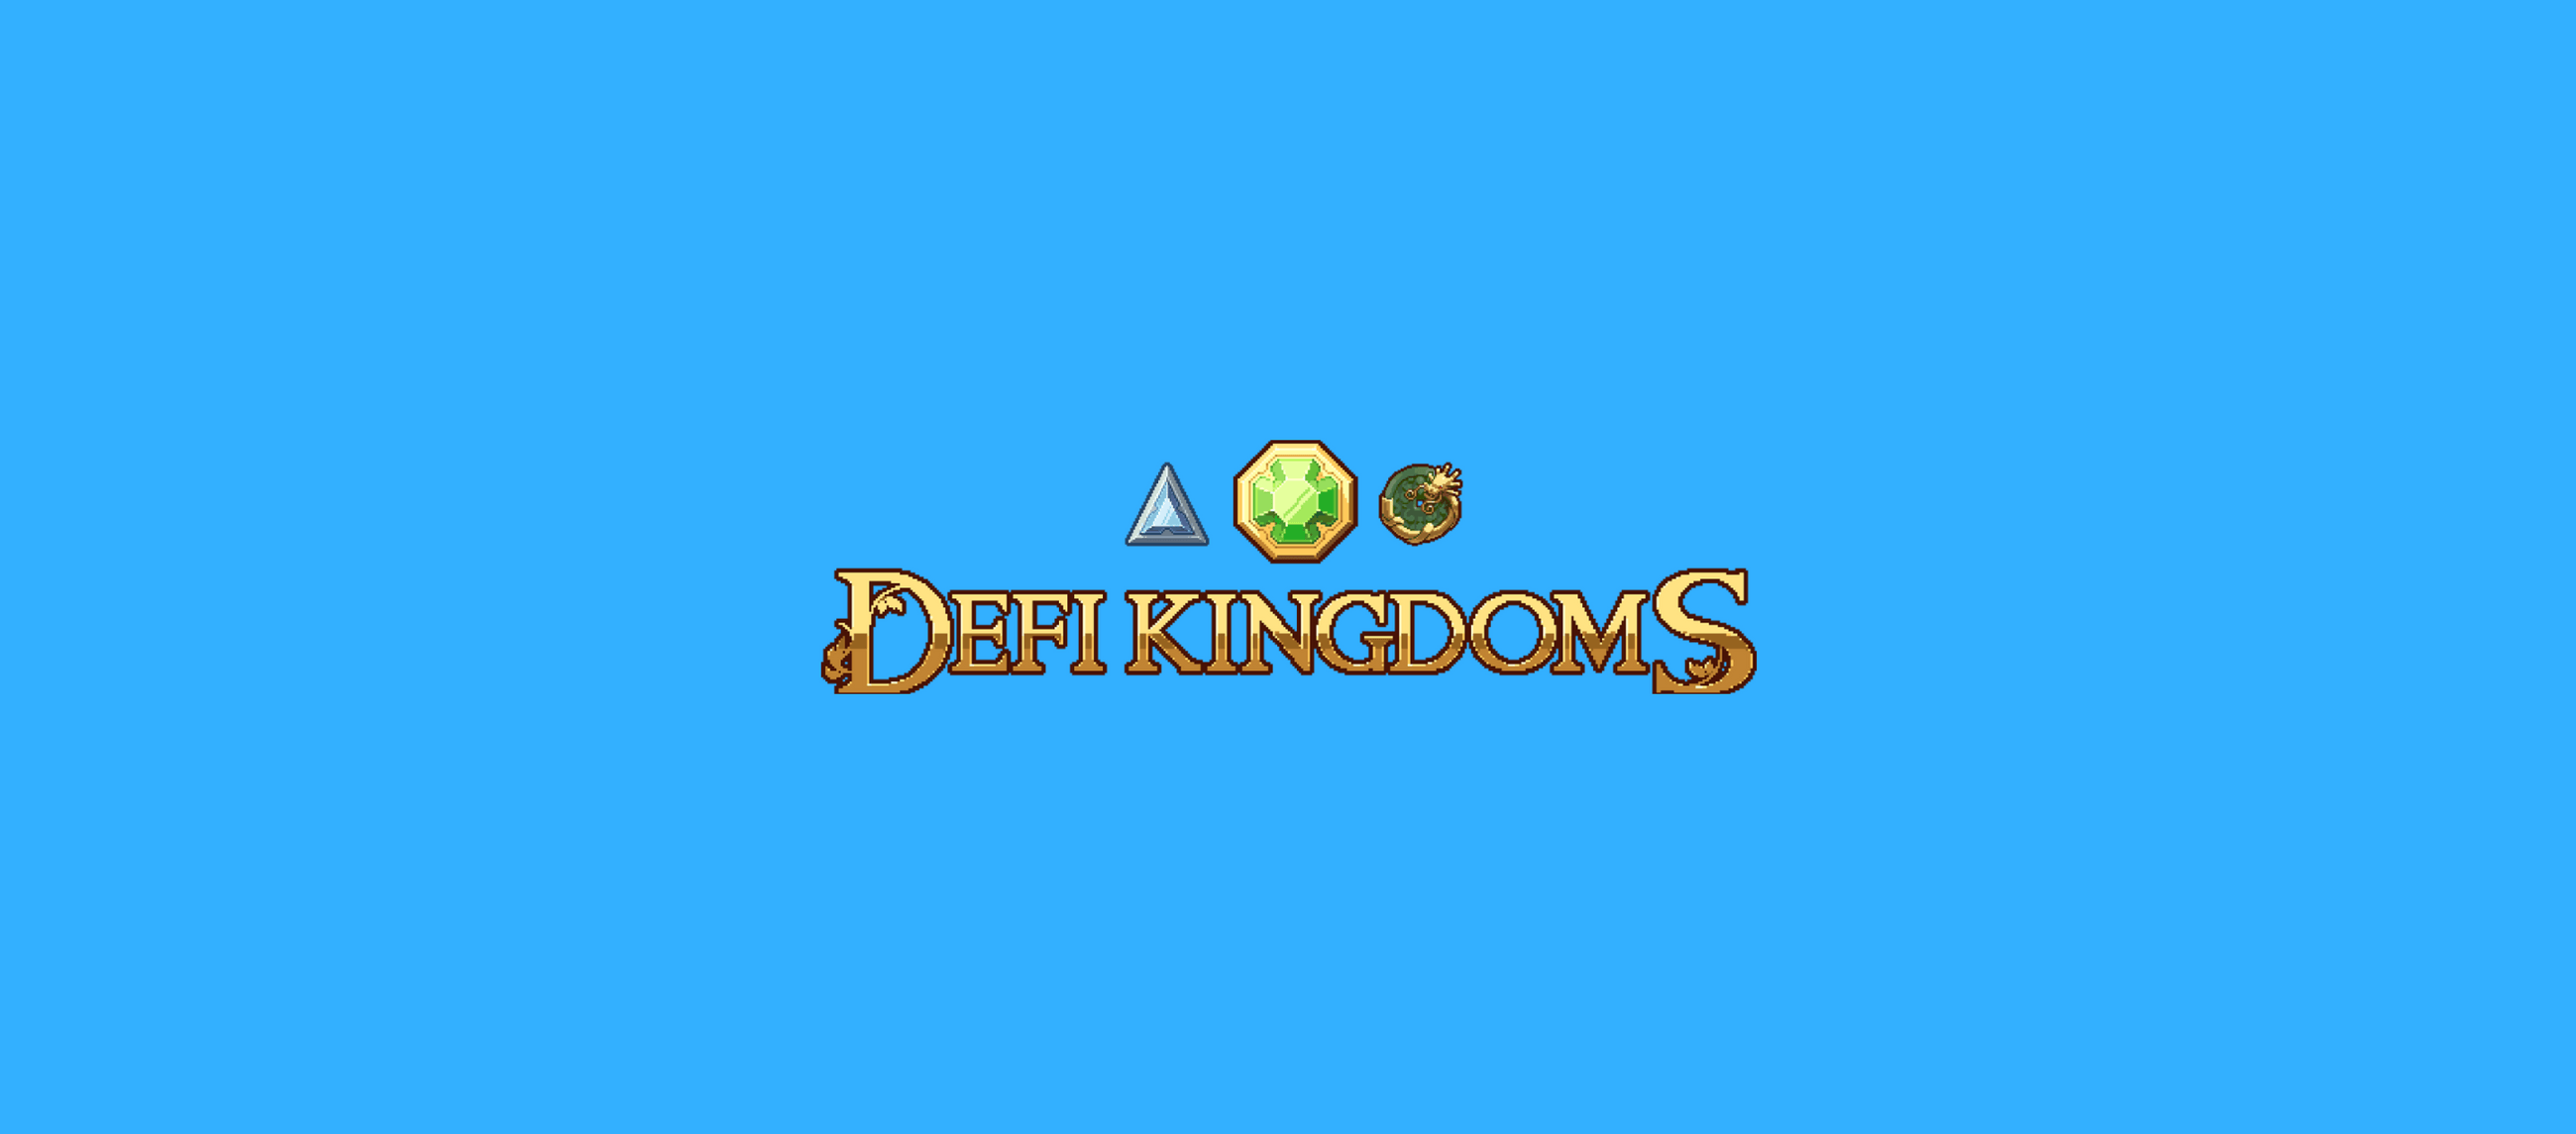 DeFi Kingdoms Brand